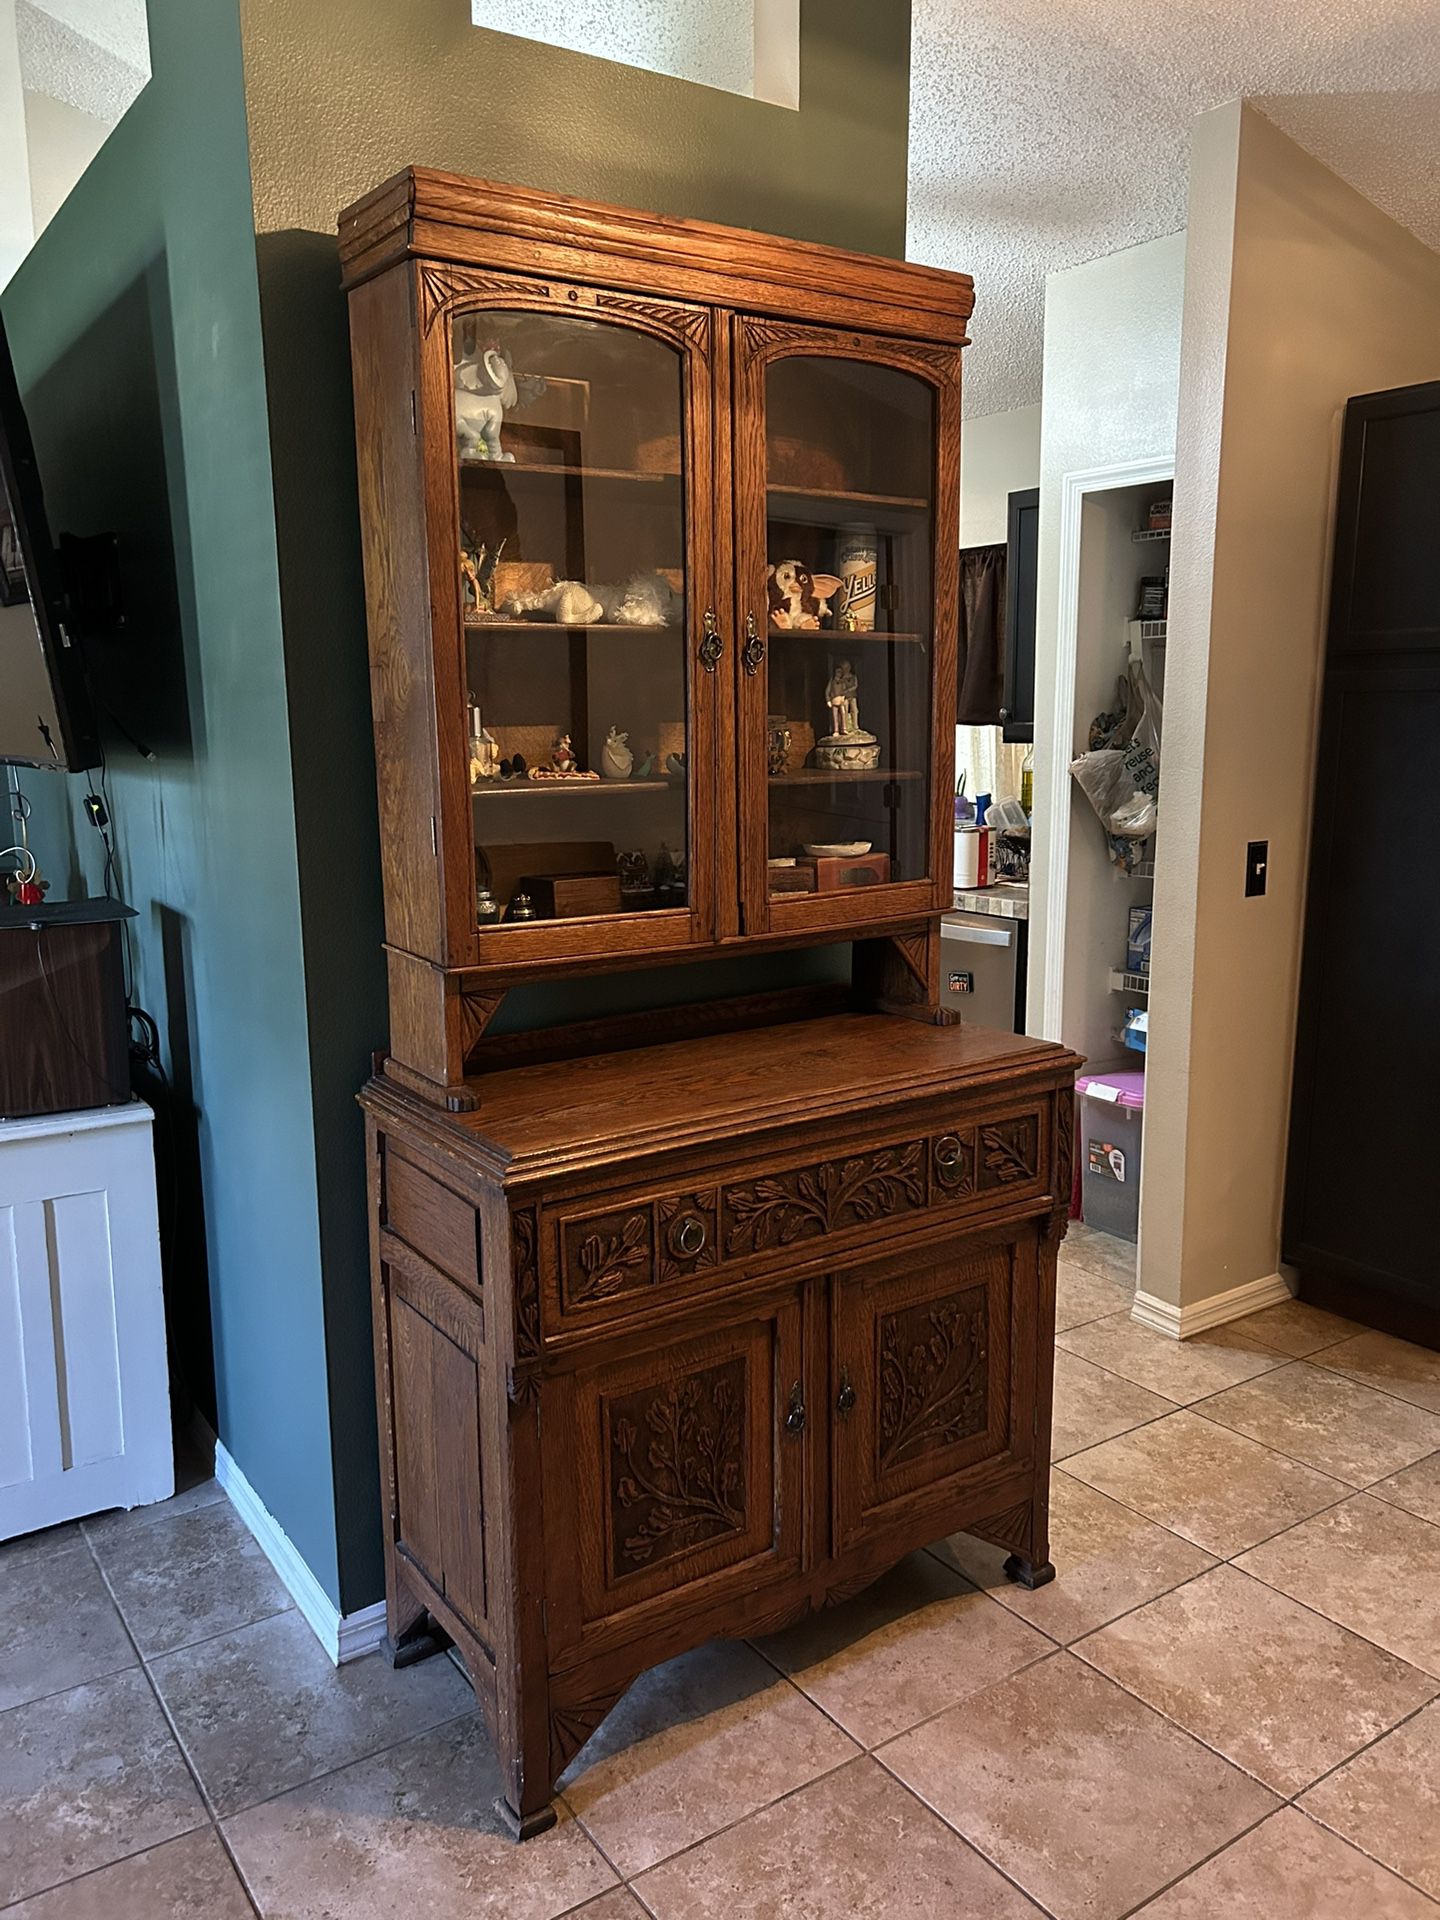 1800’s Antique 2 Piece Hutch Curio Cabinet